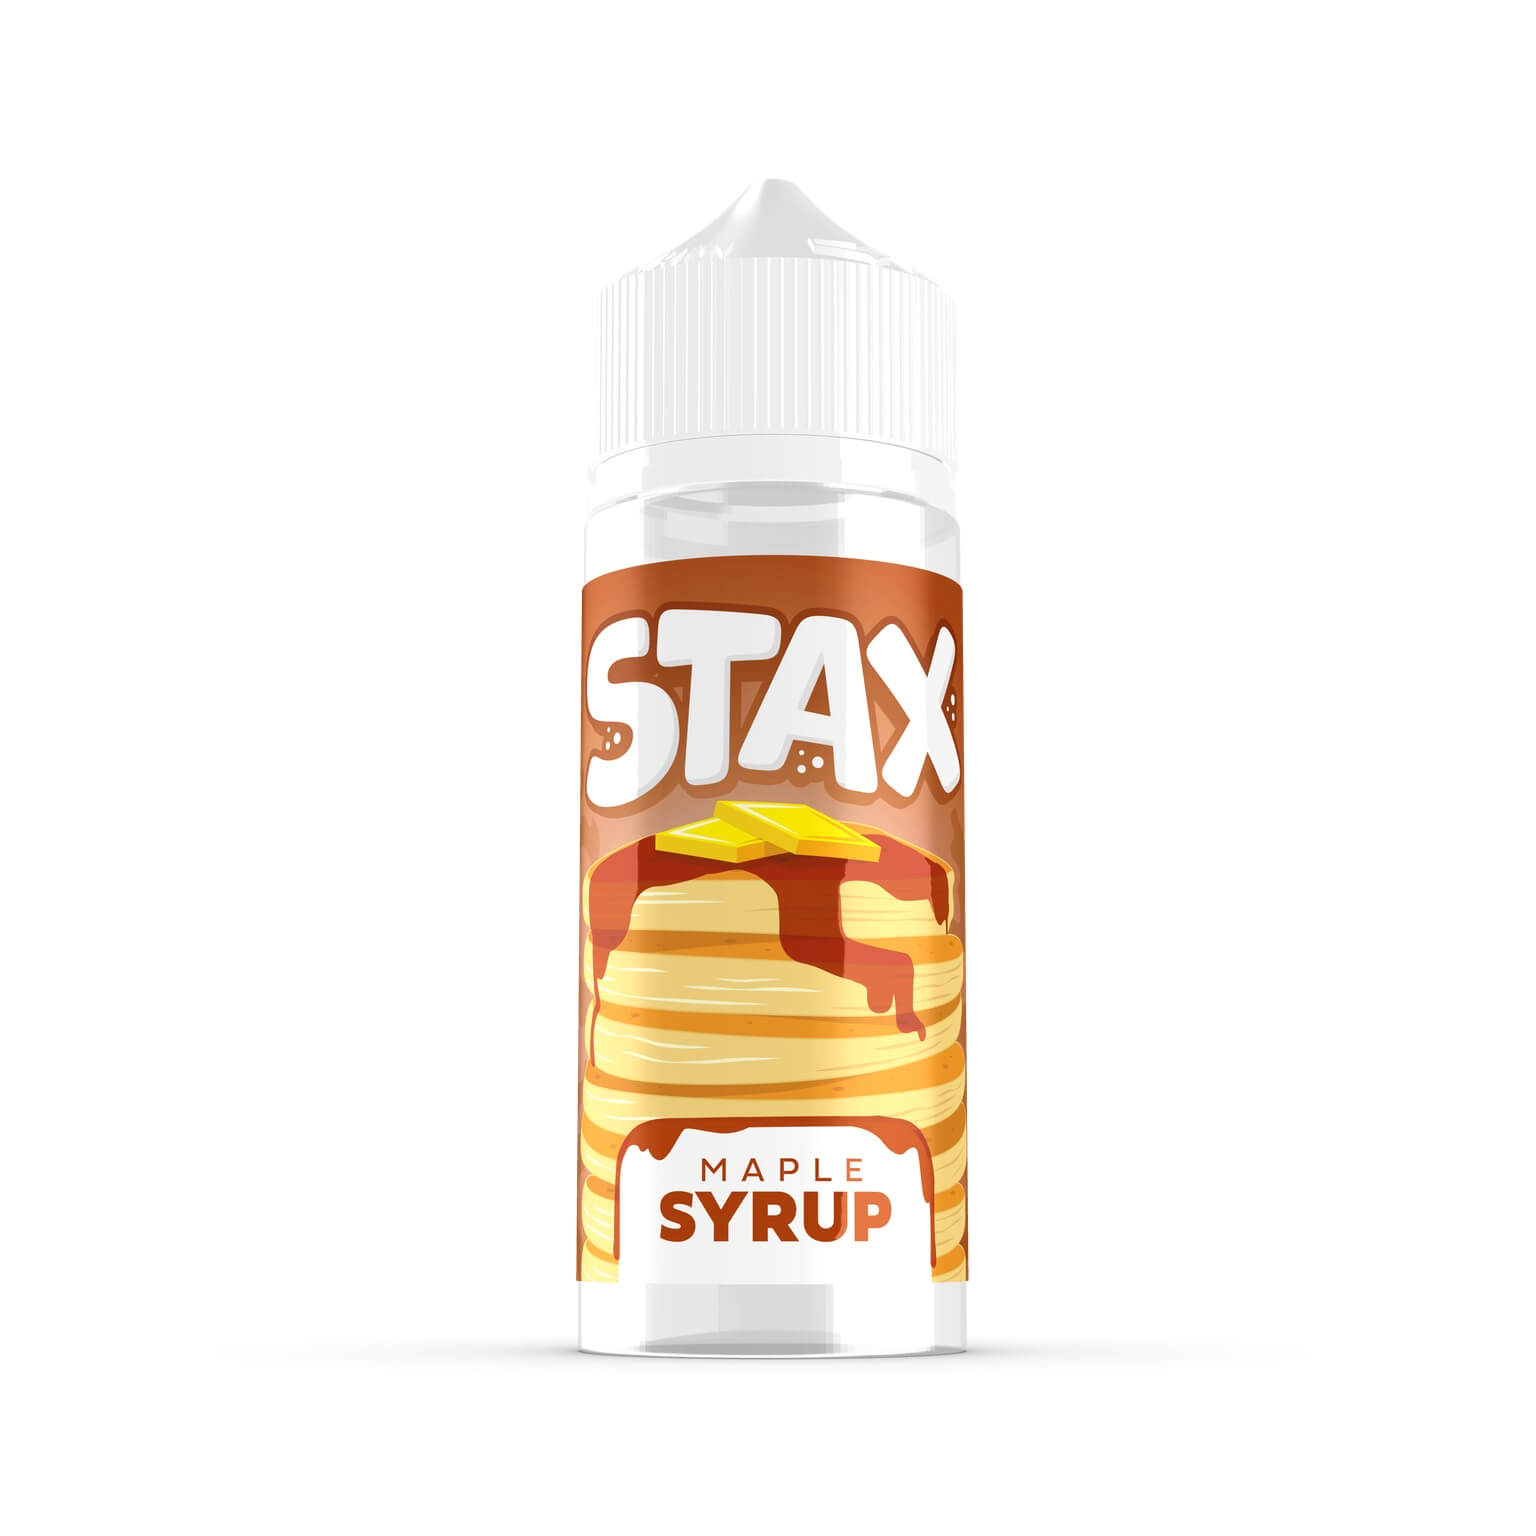 Stax maple syrup 100ml shortfill e-liquid available at dispergo vaping uk